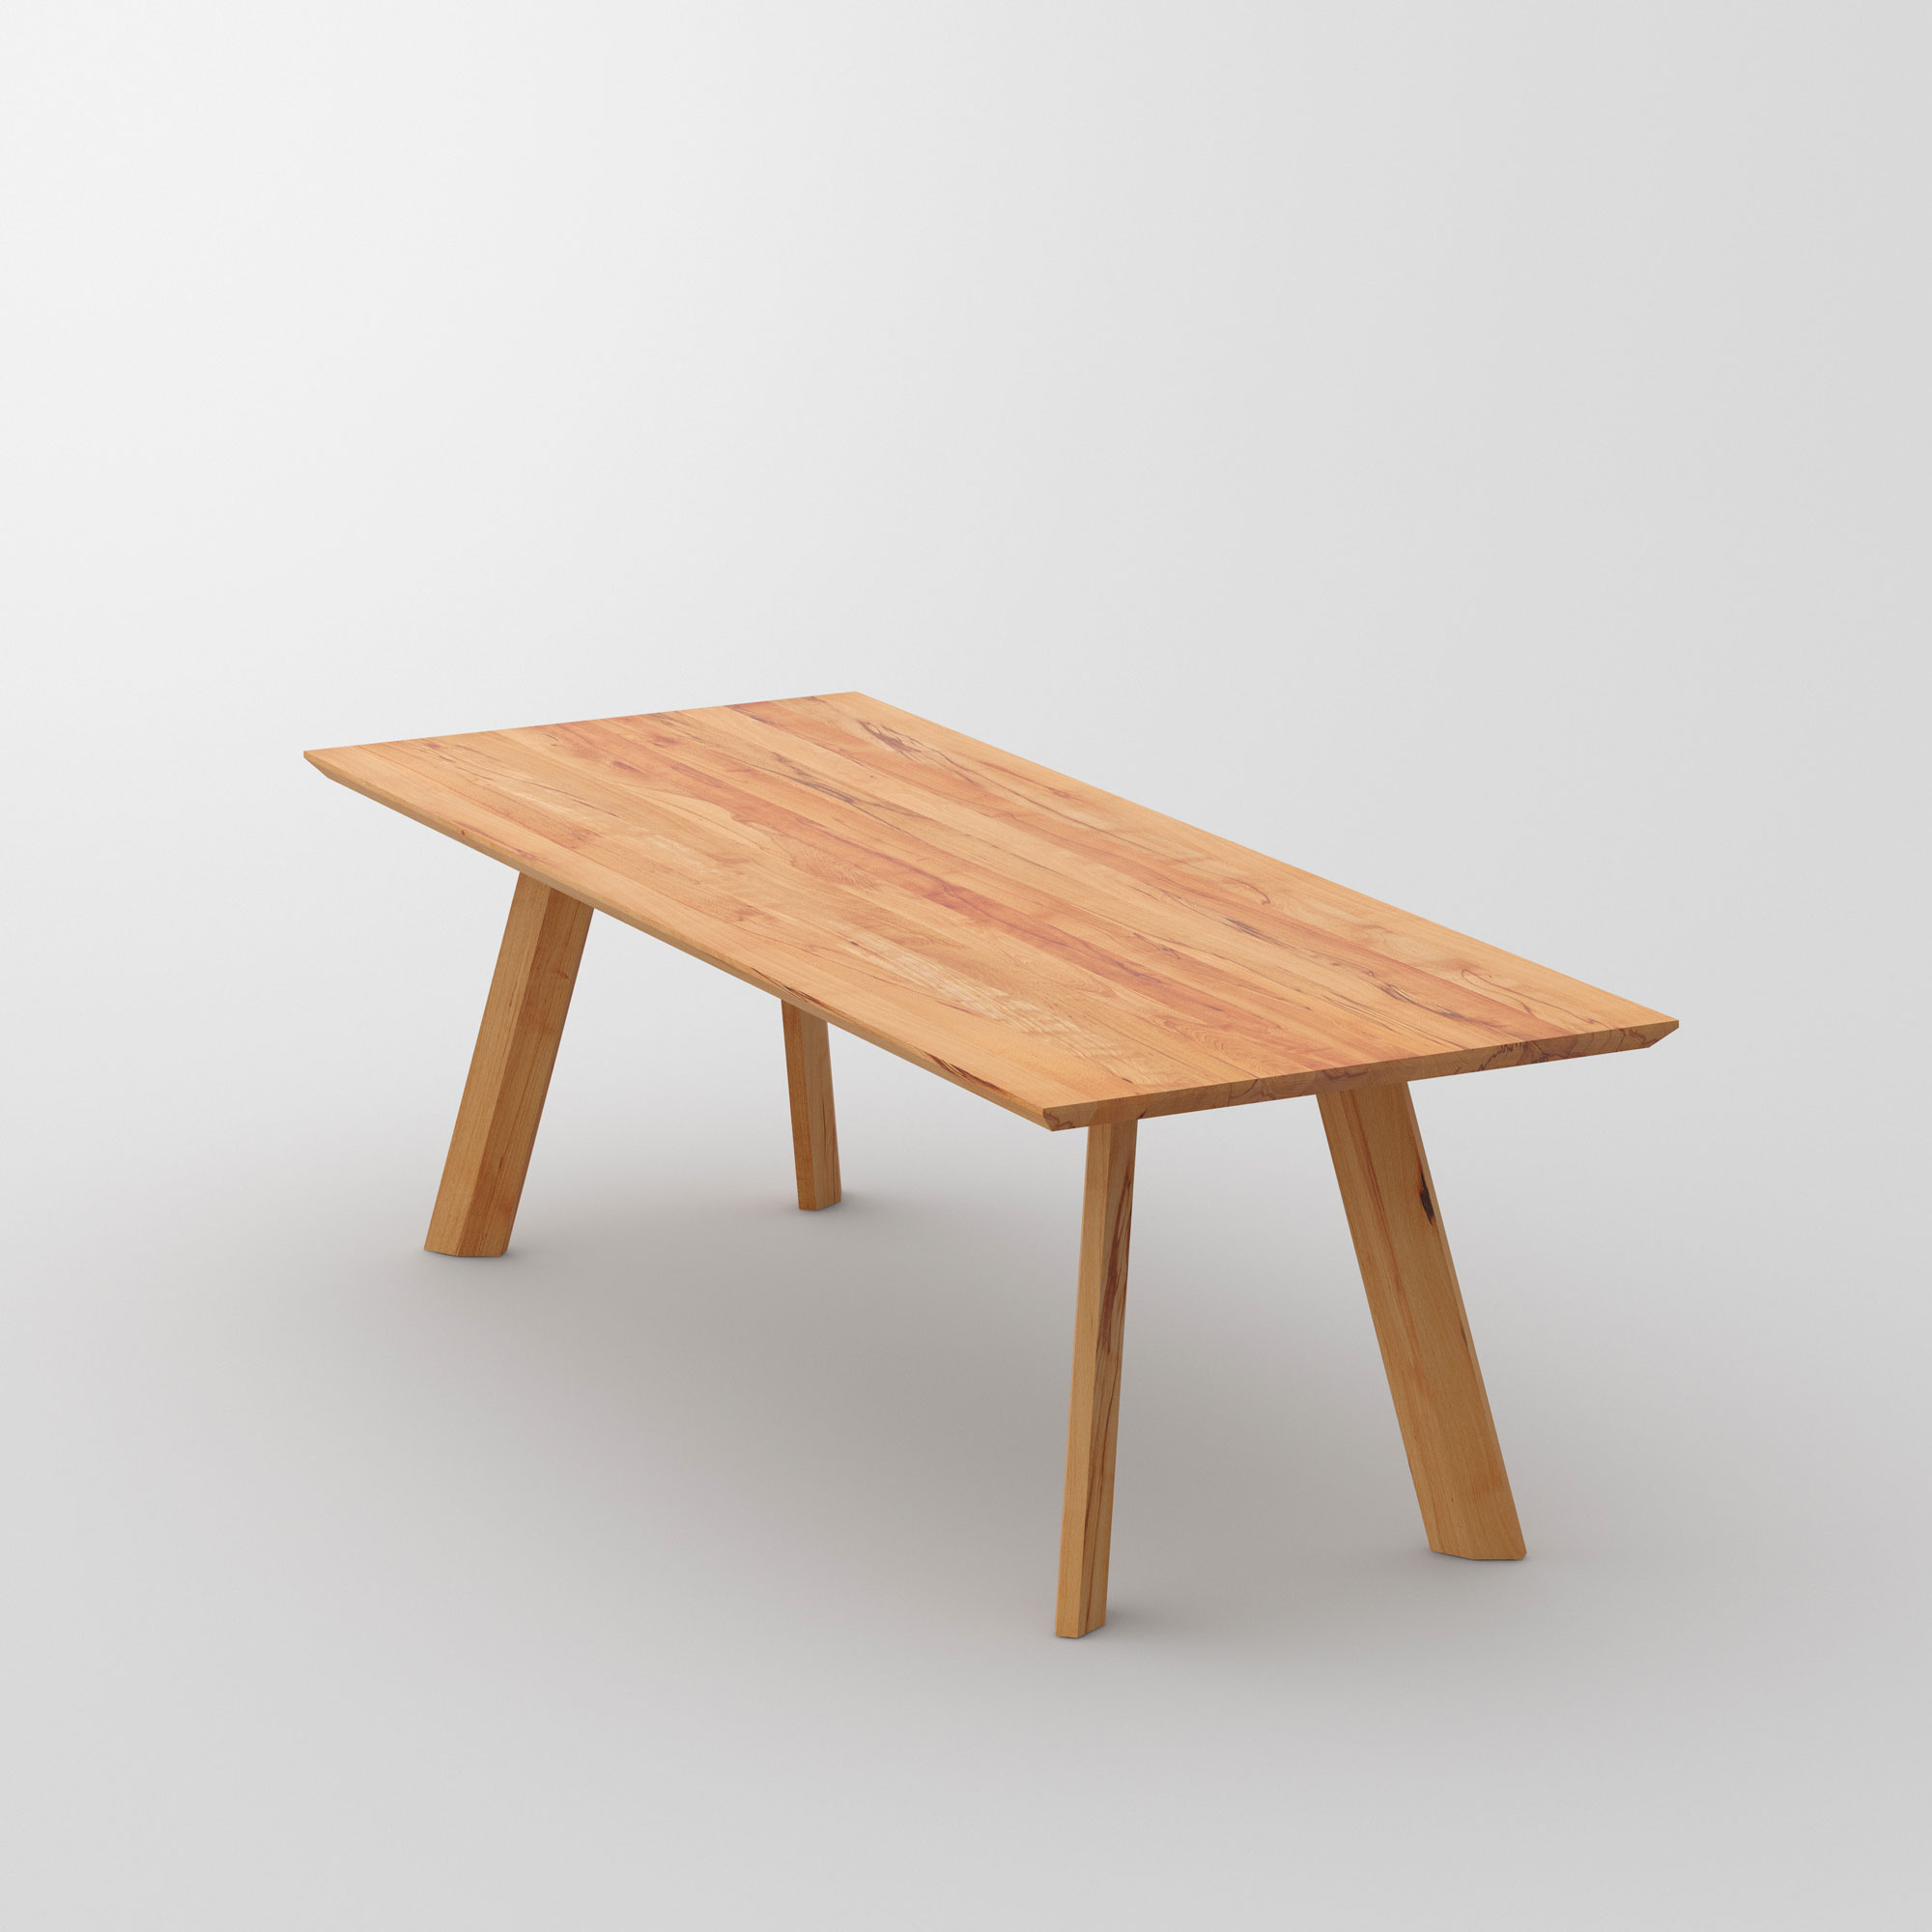 Designer Living Room Table RHOMBI BASIC cam2 custom made in solid wood by vitamin design